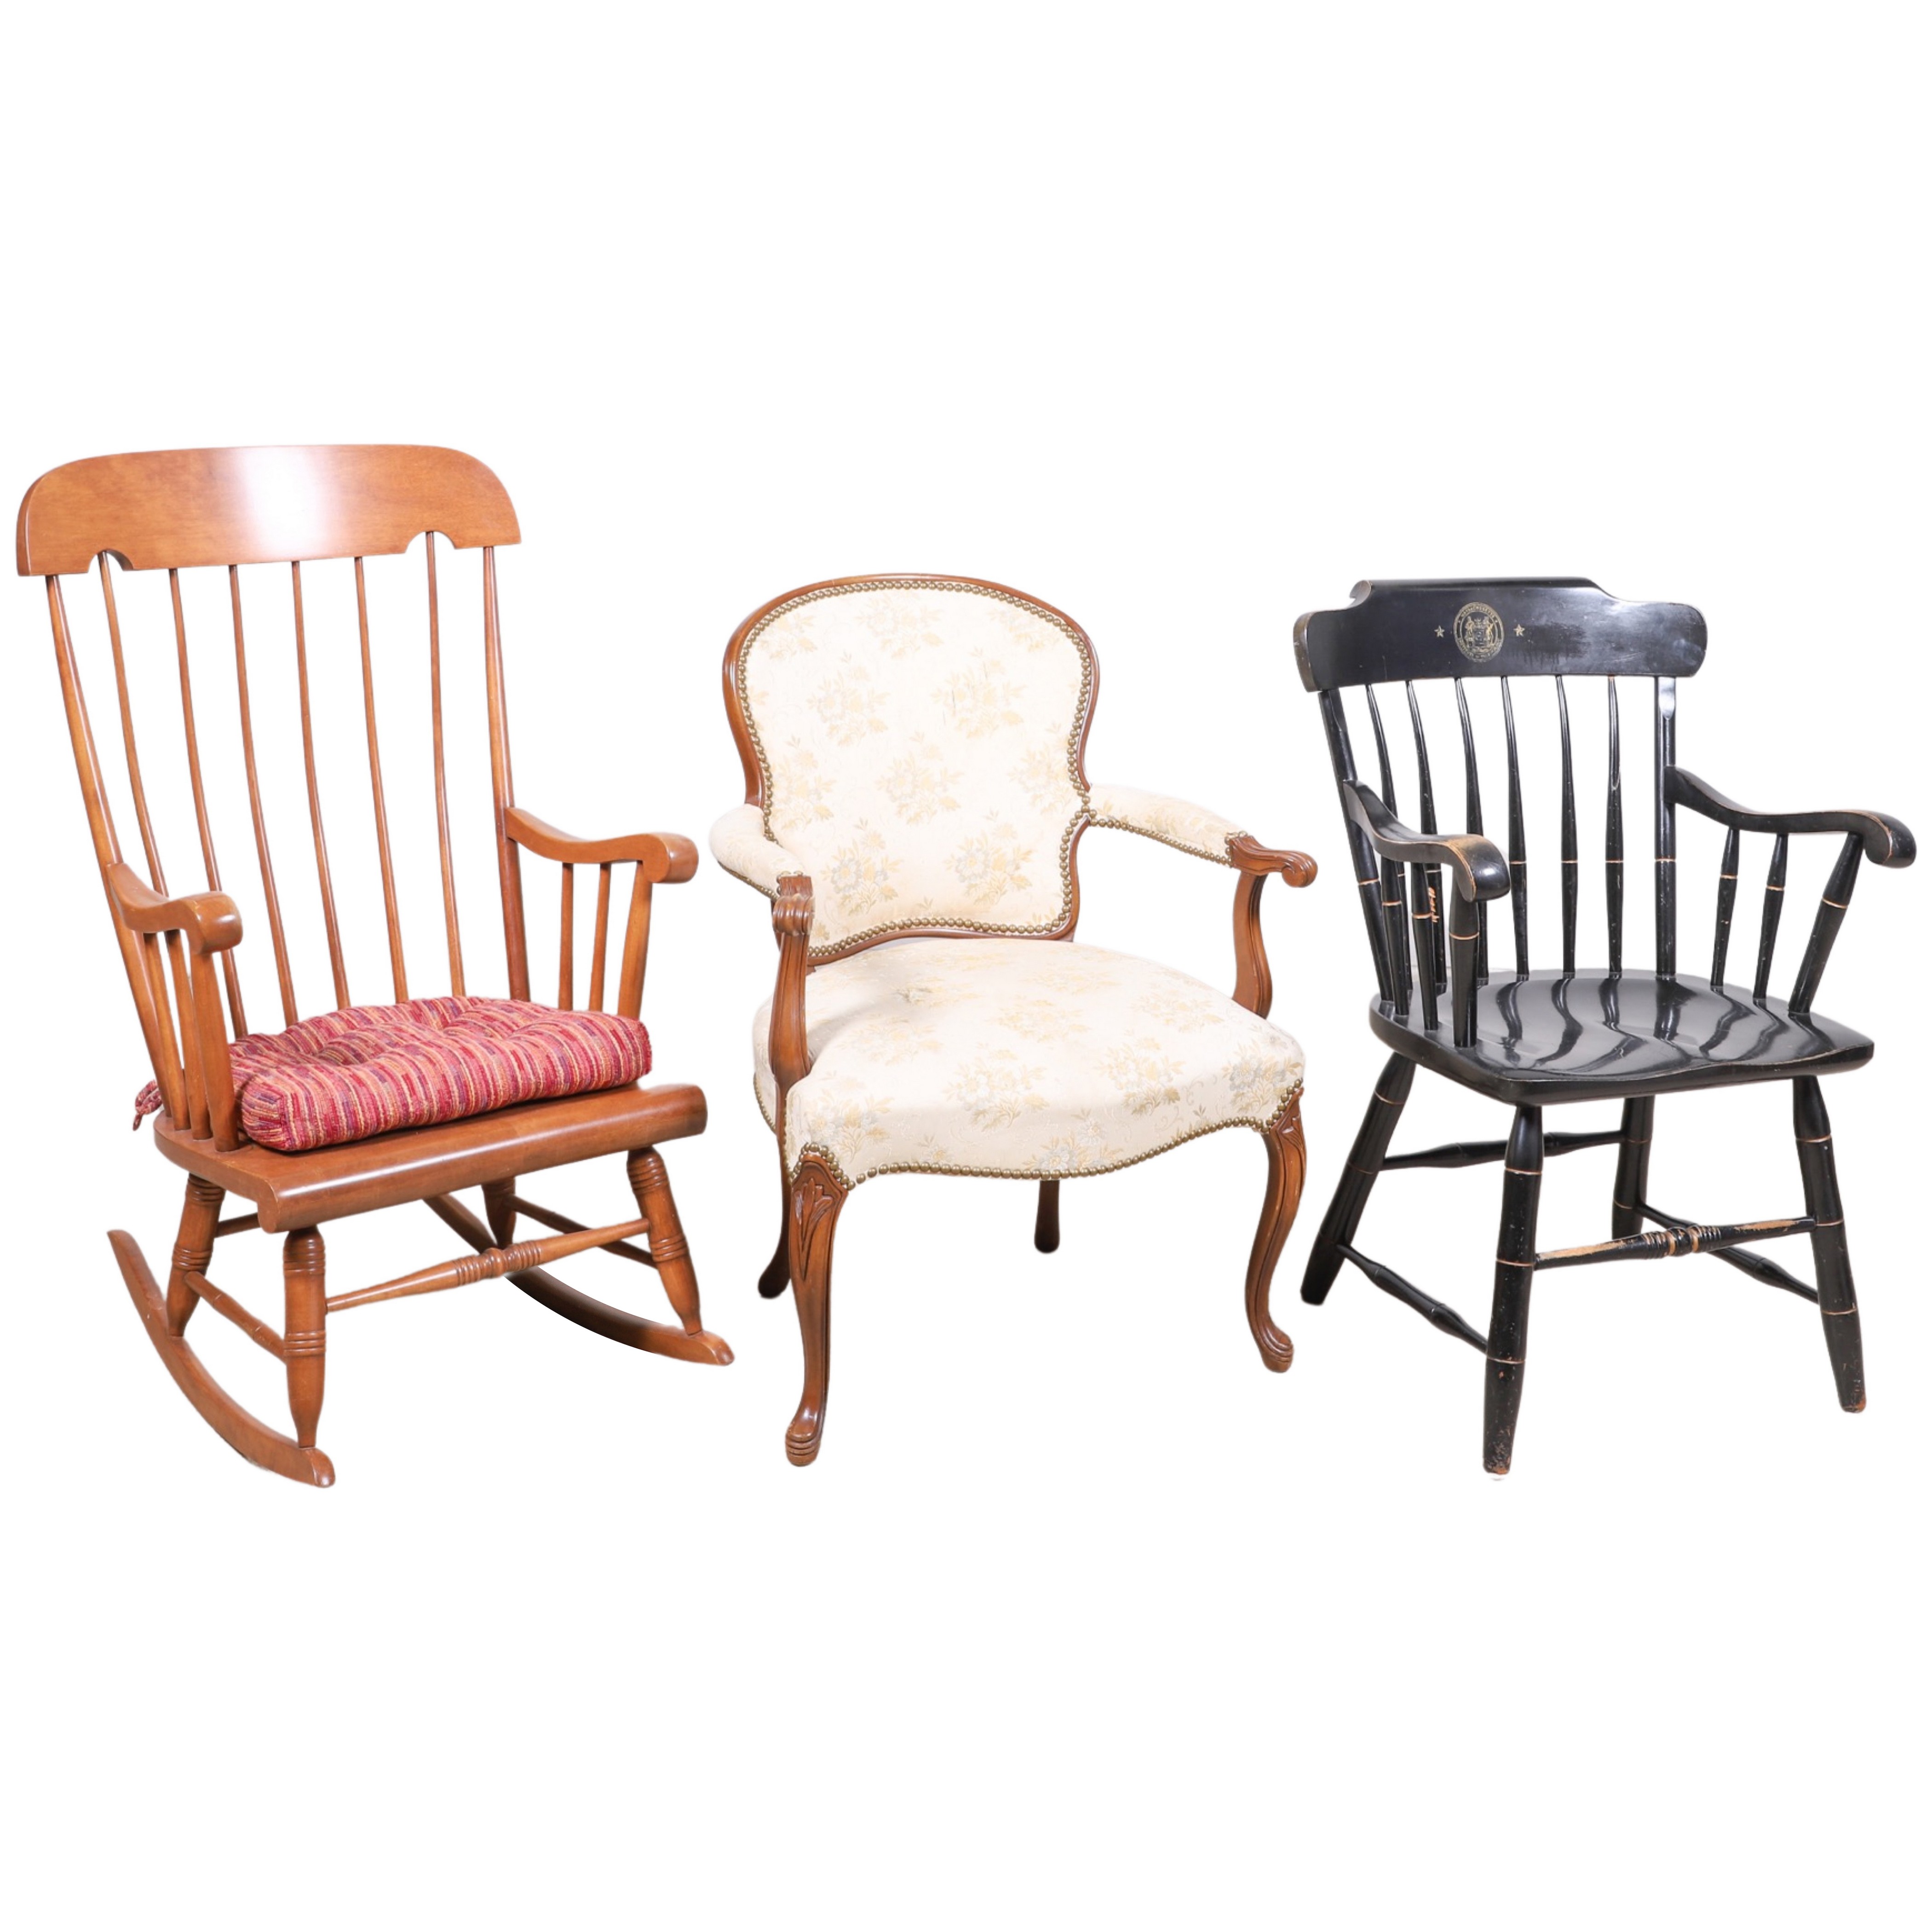 (3) Decorative armchairs, c/o Massachusetts